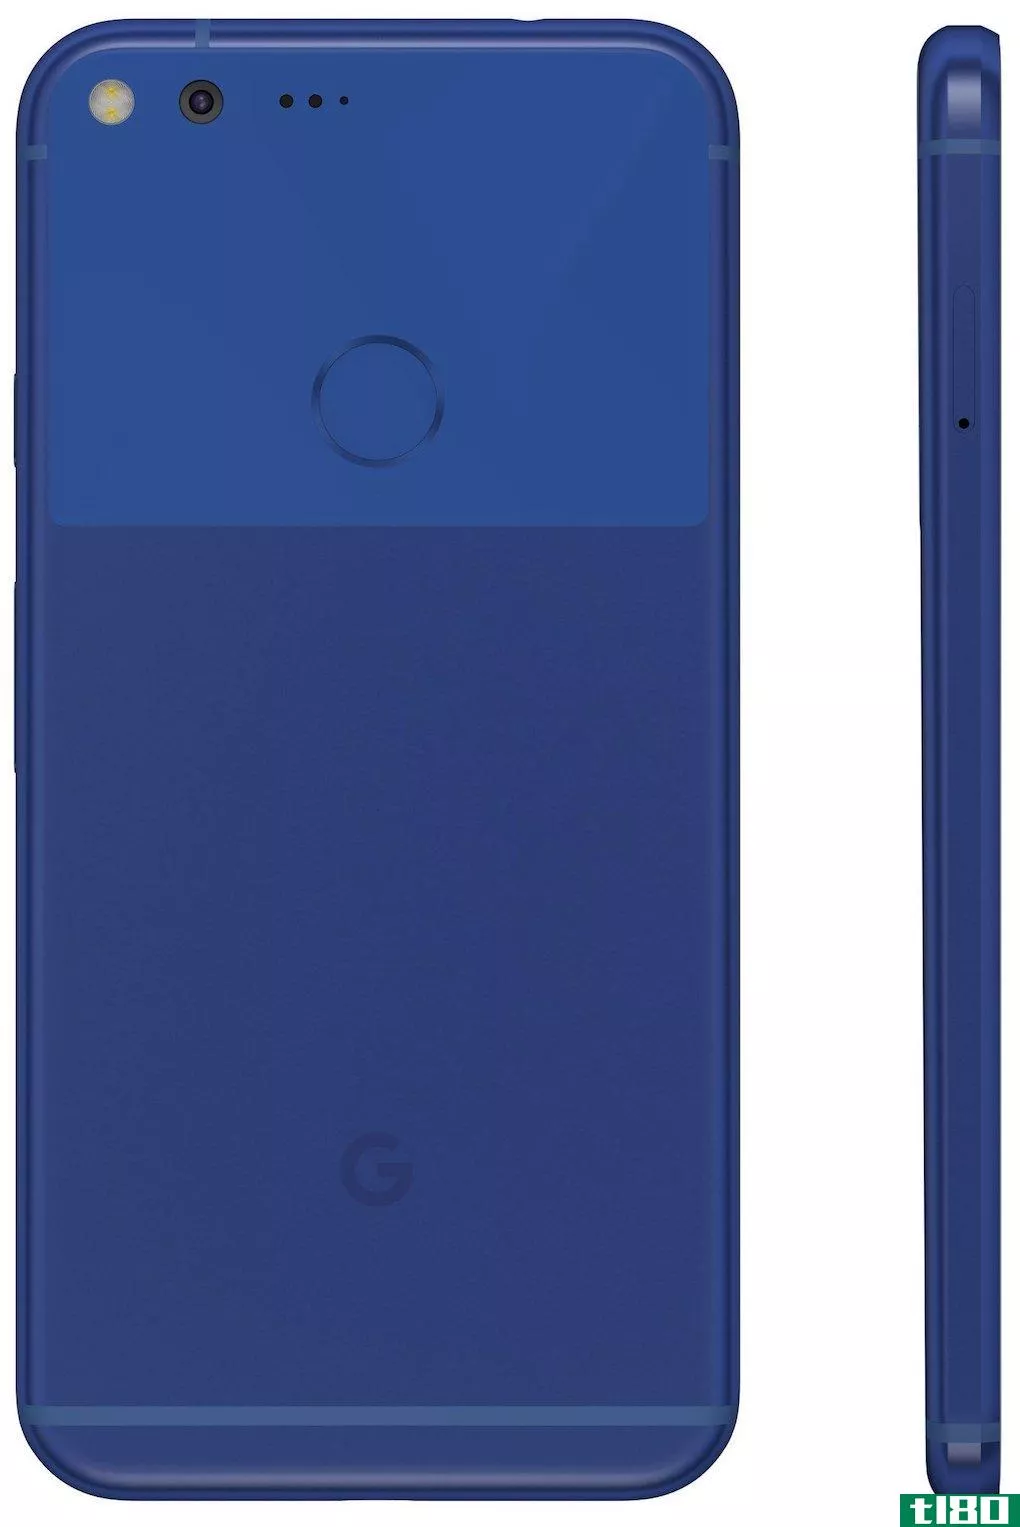 verizon是最新泄露谷歌像素**的公司，它们的颜色是蓝色的